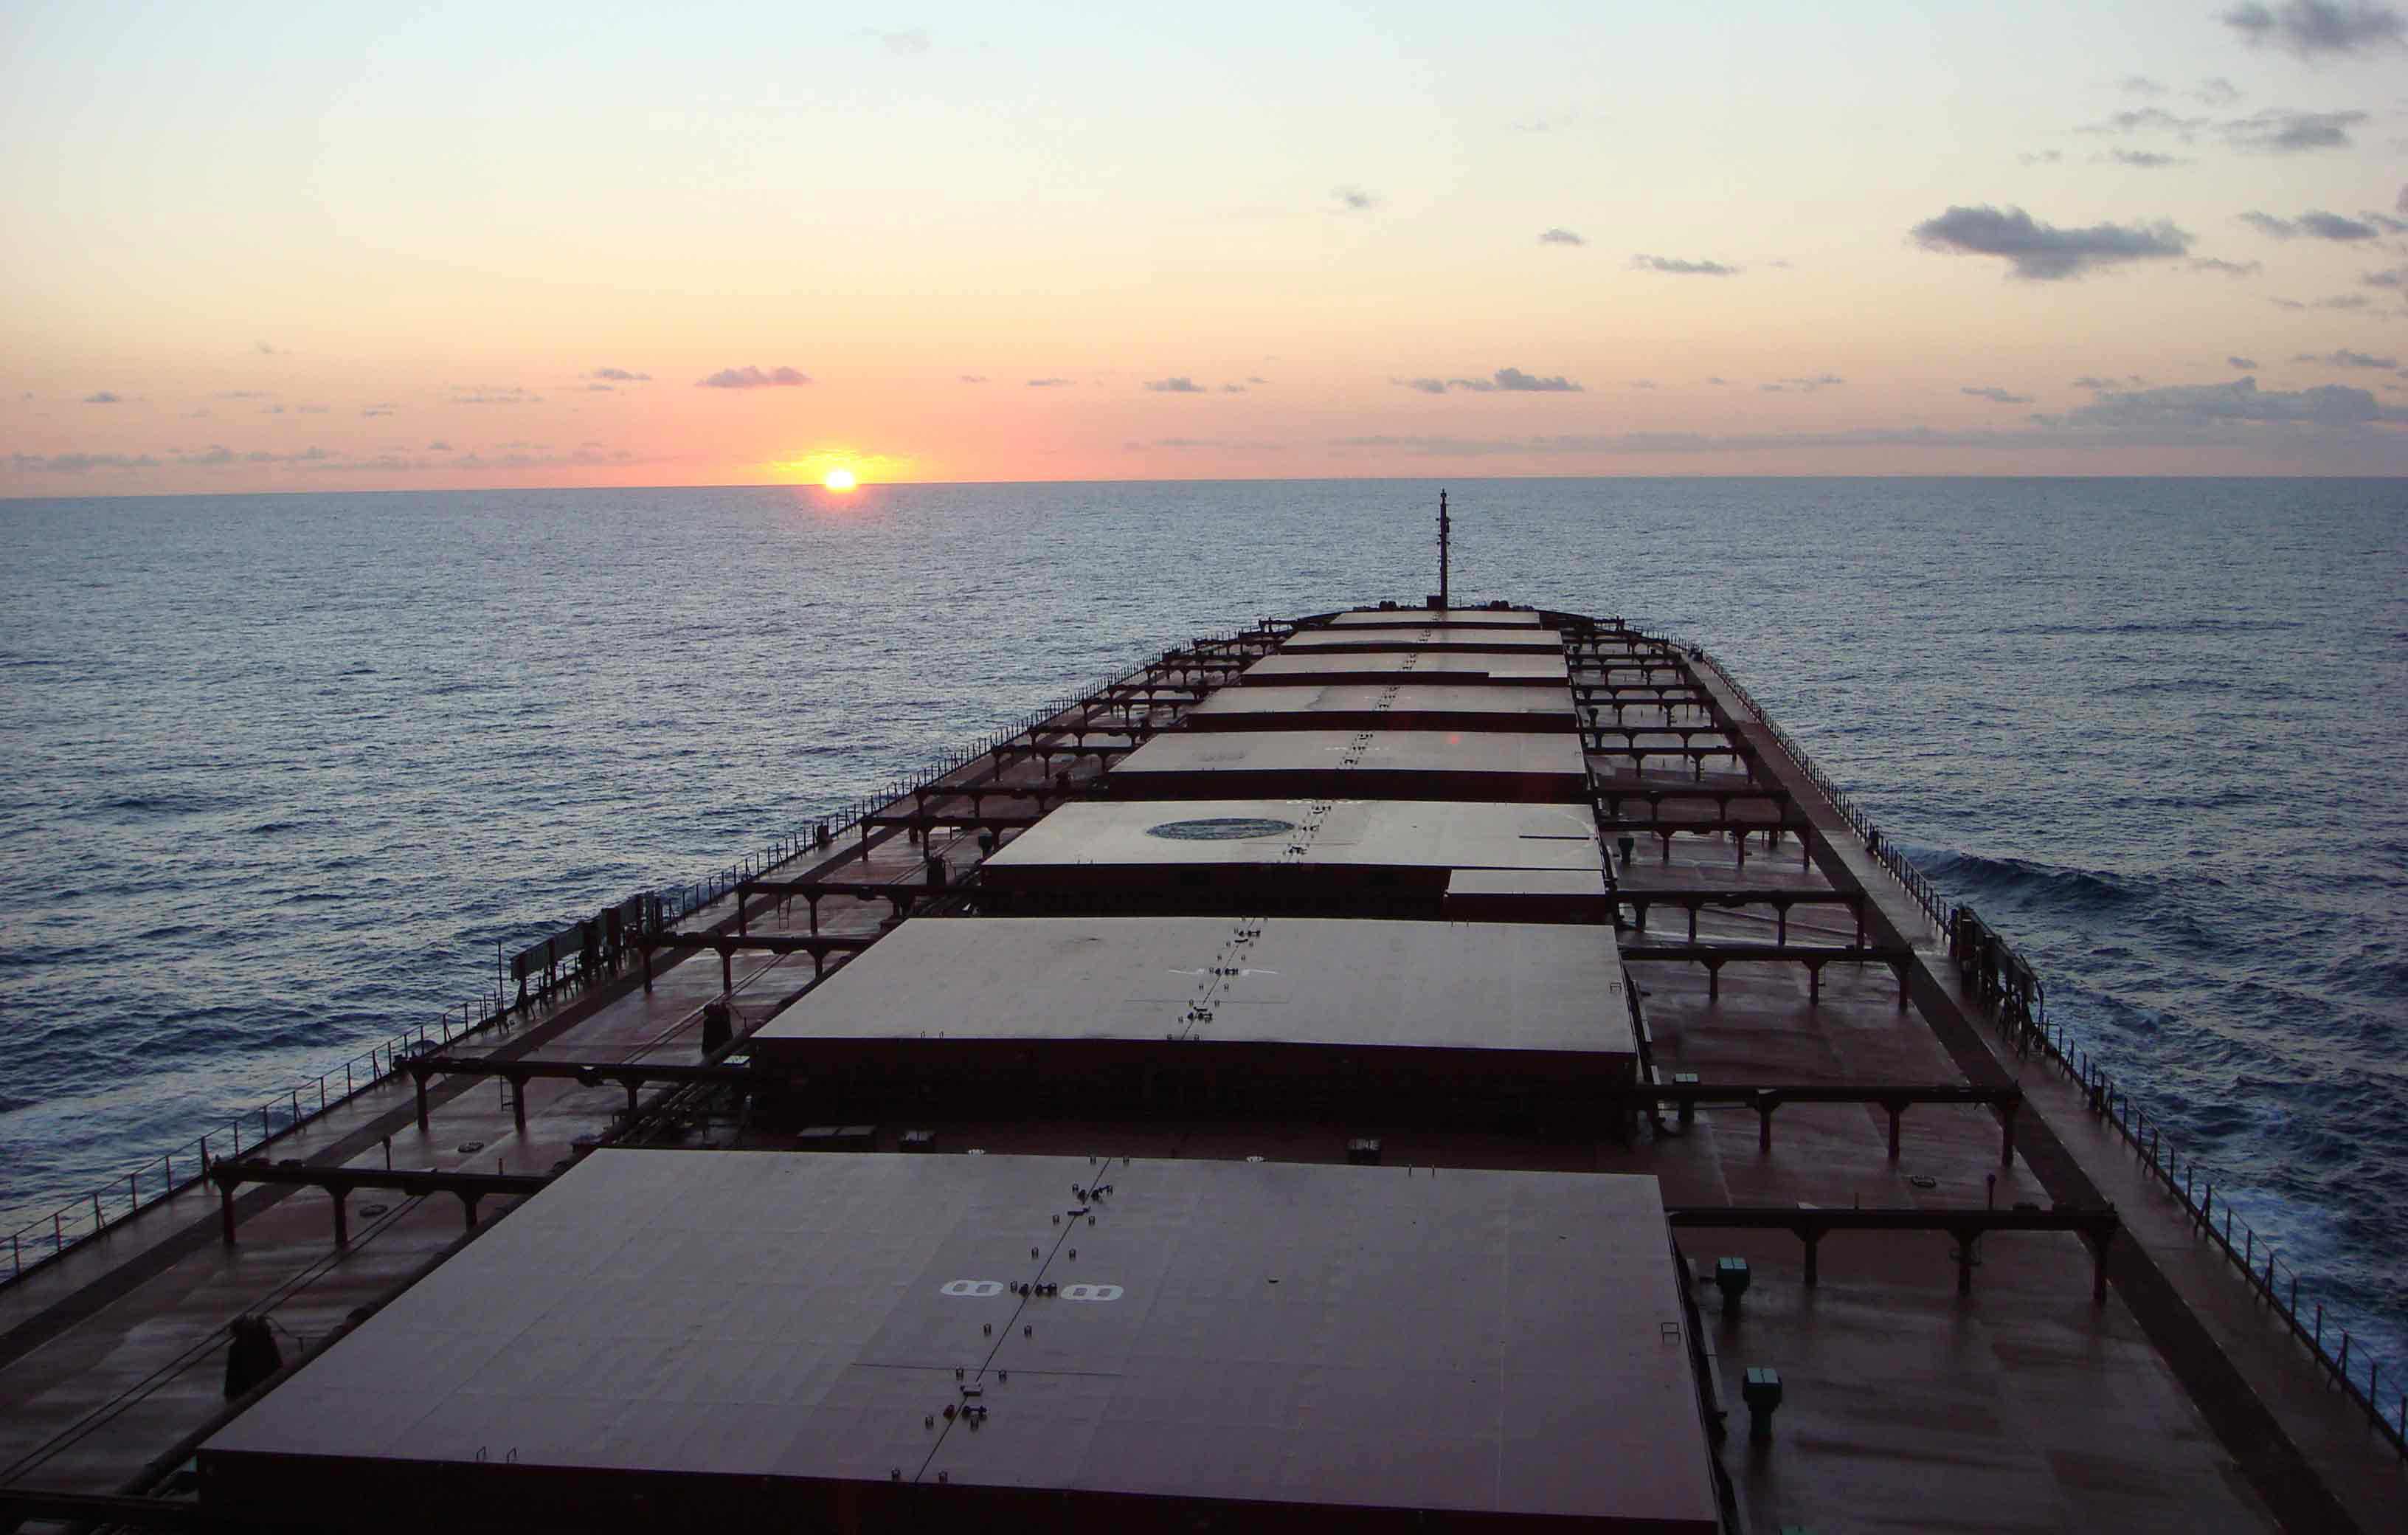 Sun setting behind an Ofer Global ship